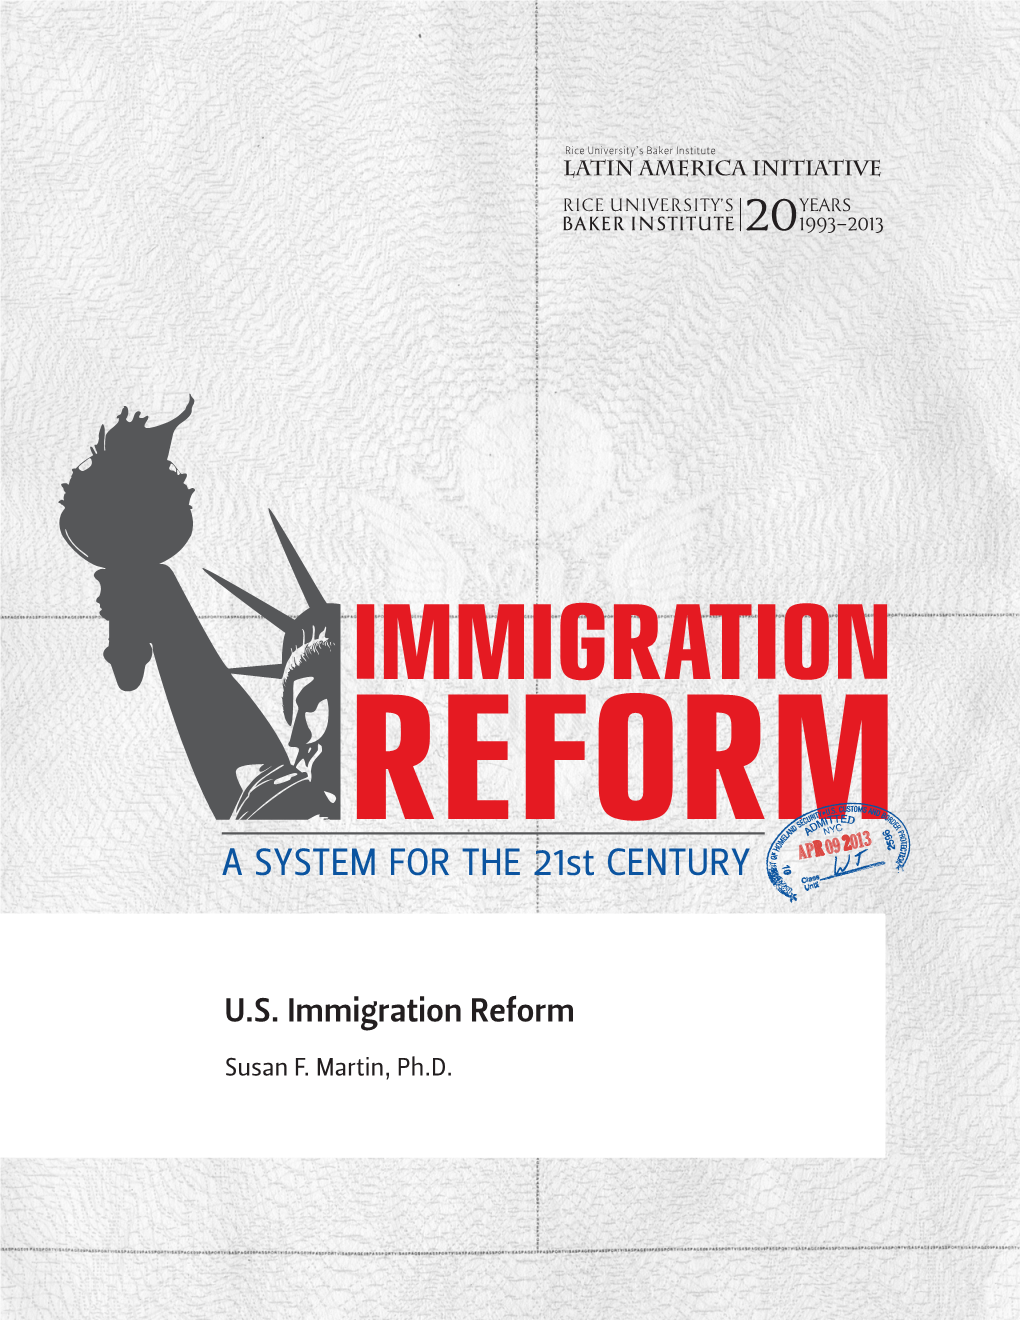 U.S. Immigration Reform